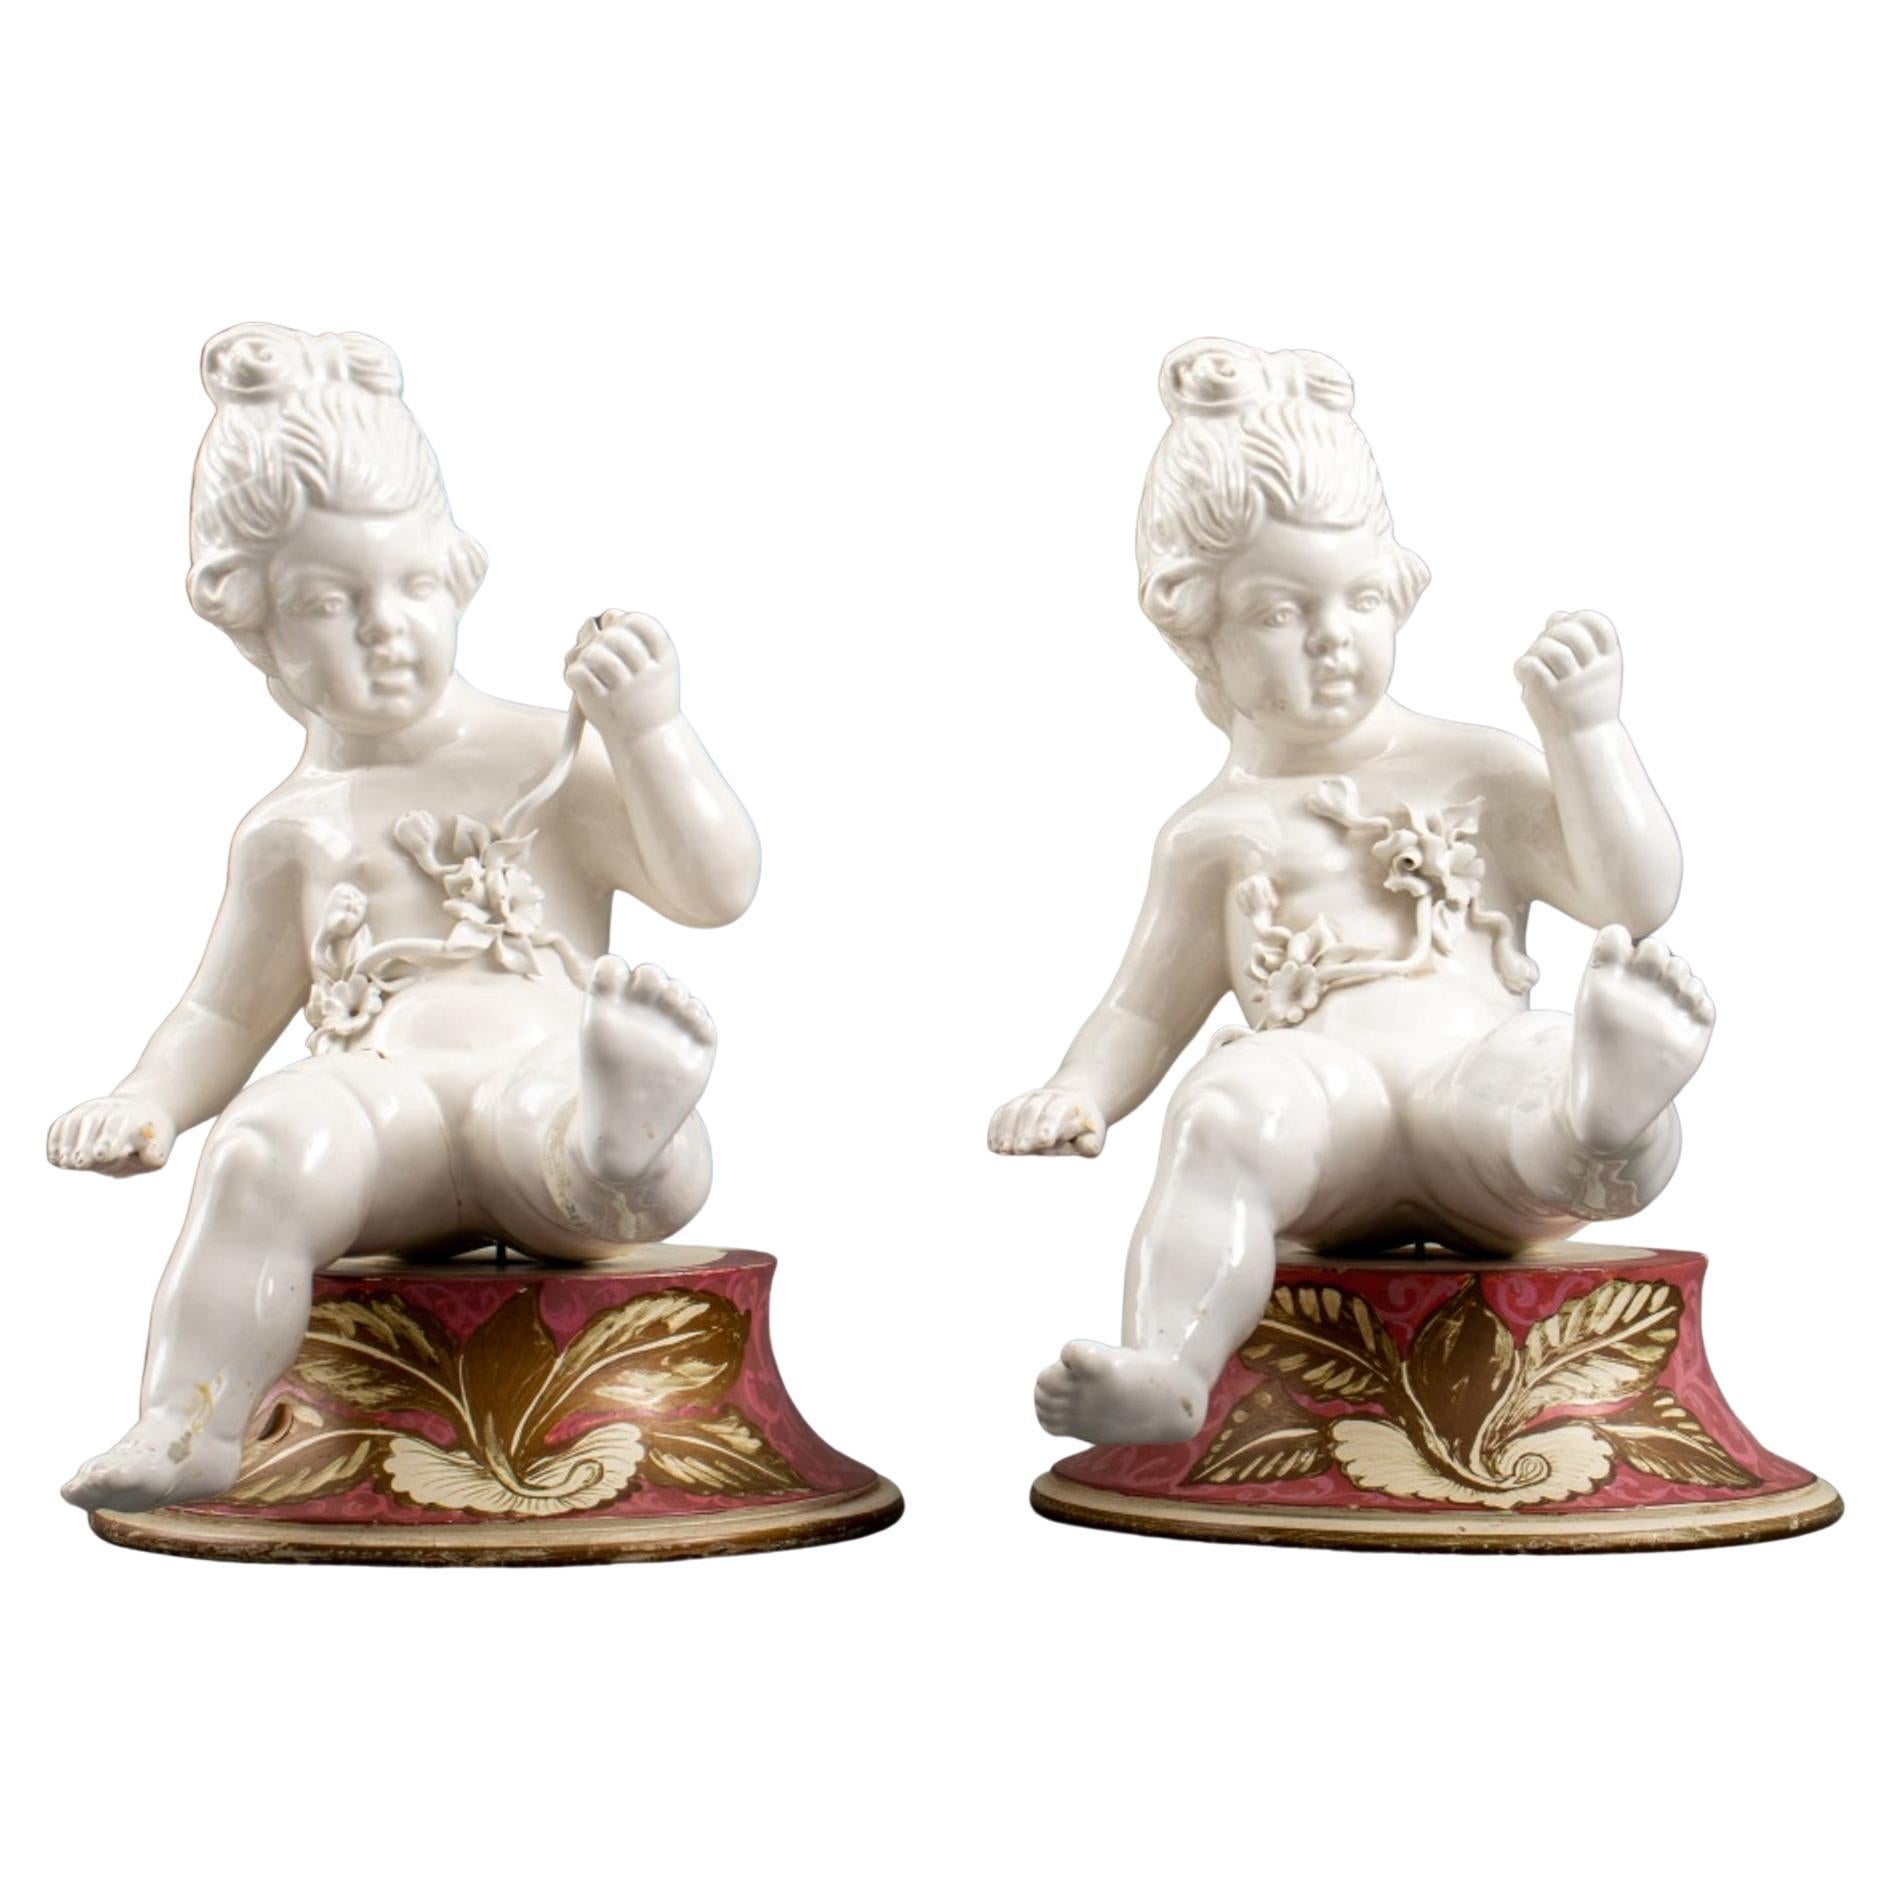 Pair of White Porcelain Cherub Putti Sculptures